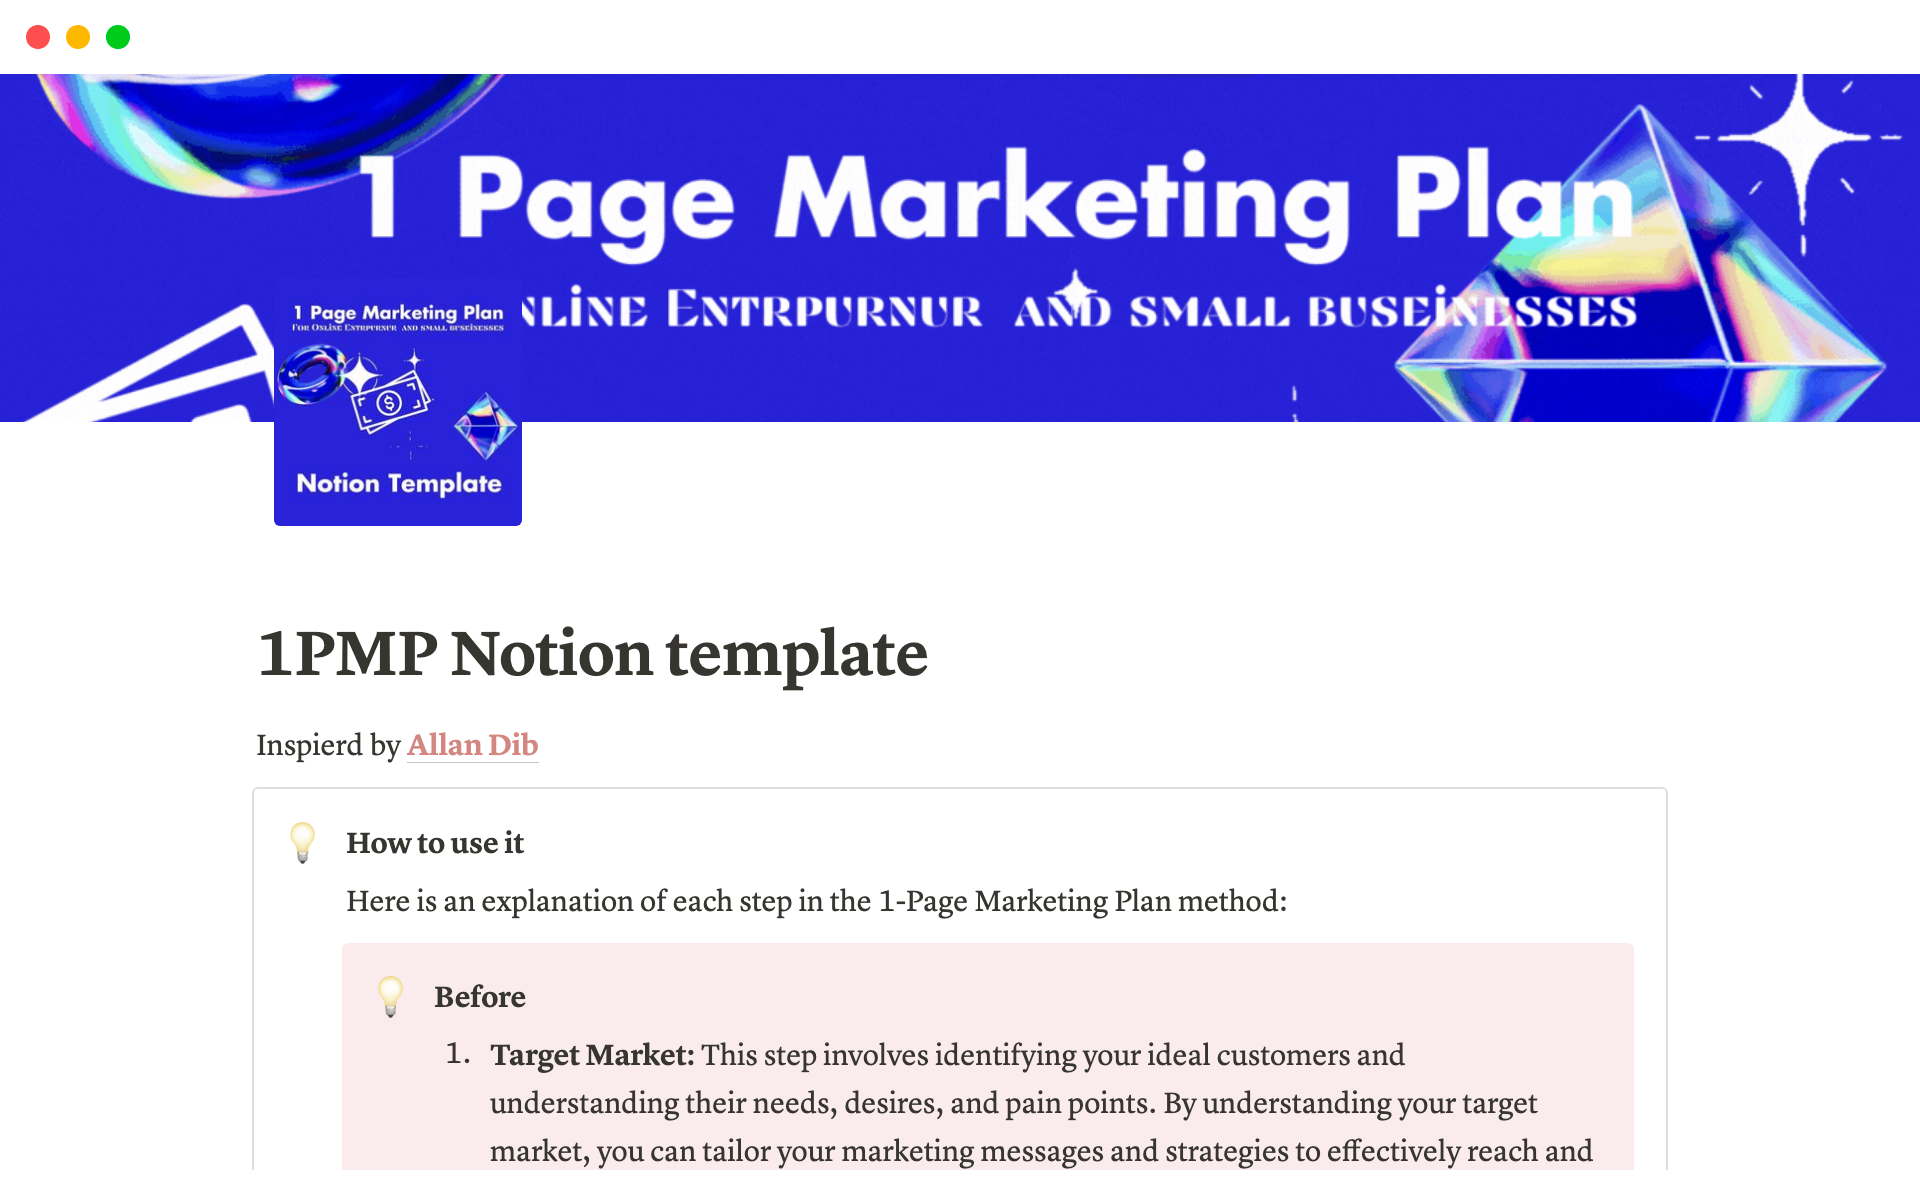 Vista previa de una plantilla para MarketBoost: The Ultimate 1-Page Marketing Plan Notion Template for Small Online Businesses